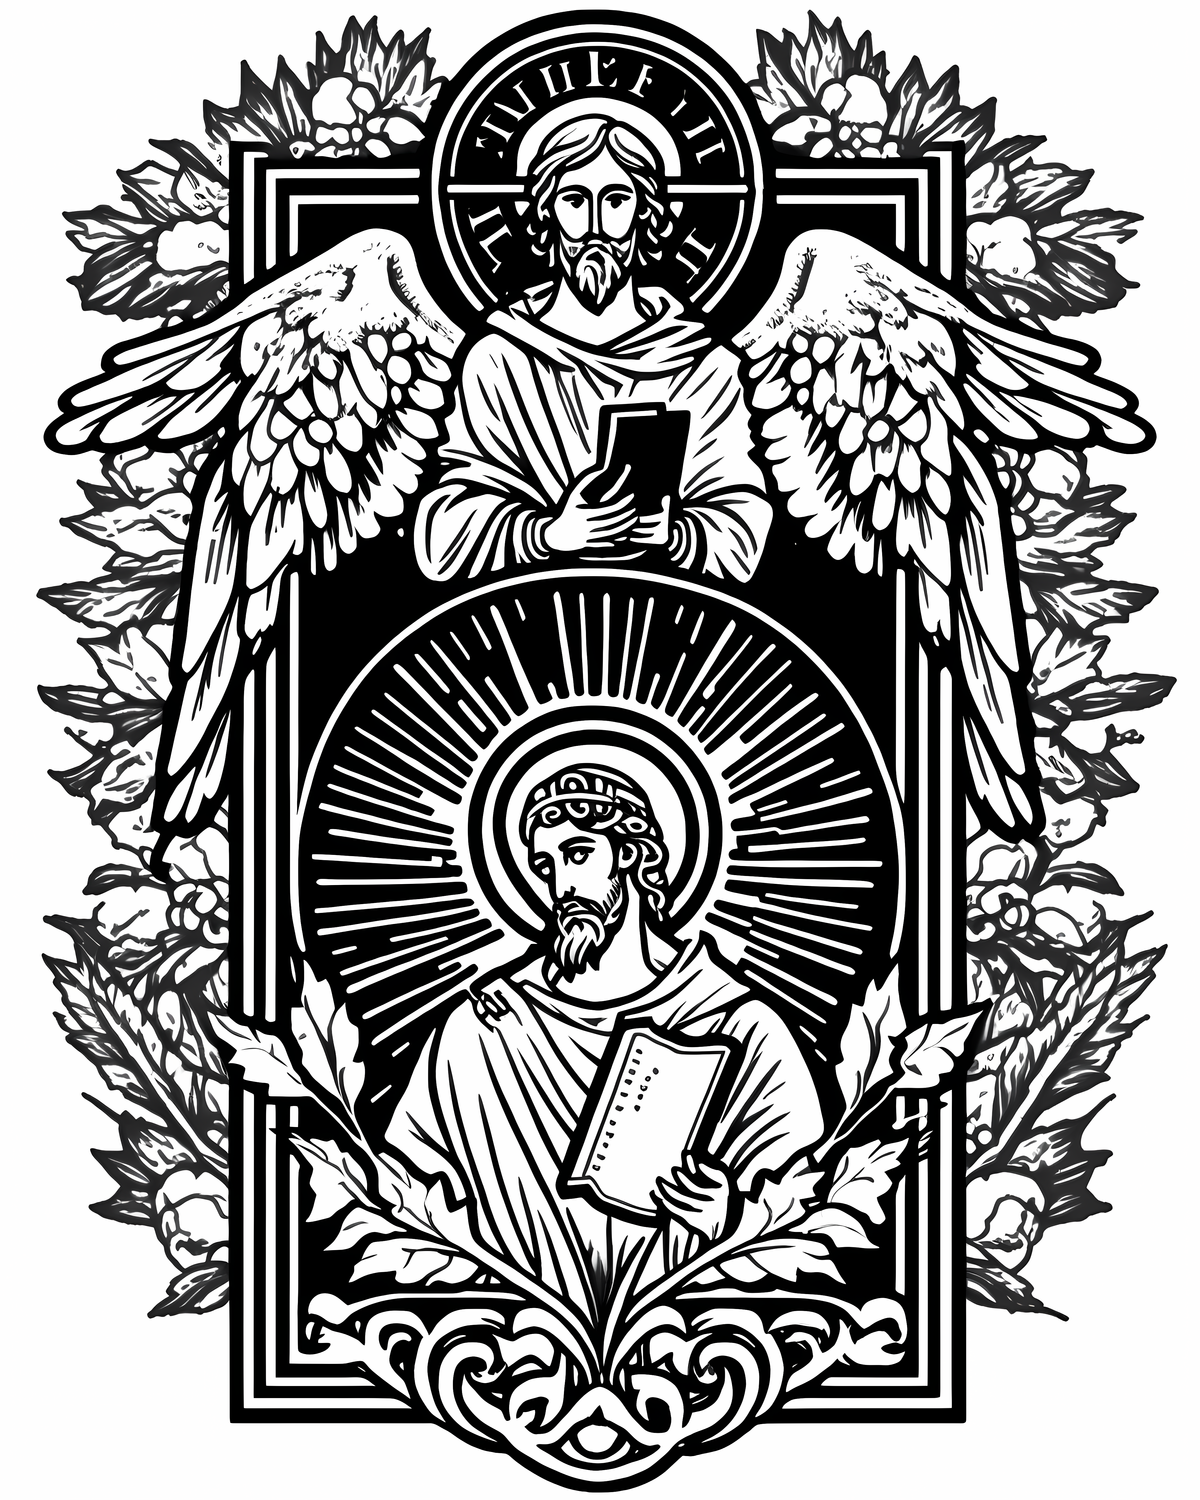 Saint Matthew and Saint Michael (2022, United States) - Catholic Coloring Page